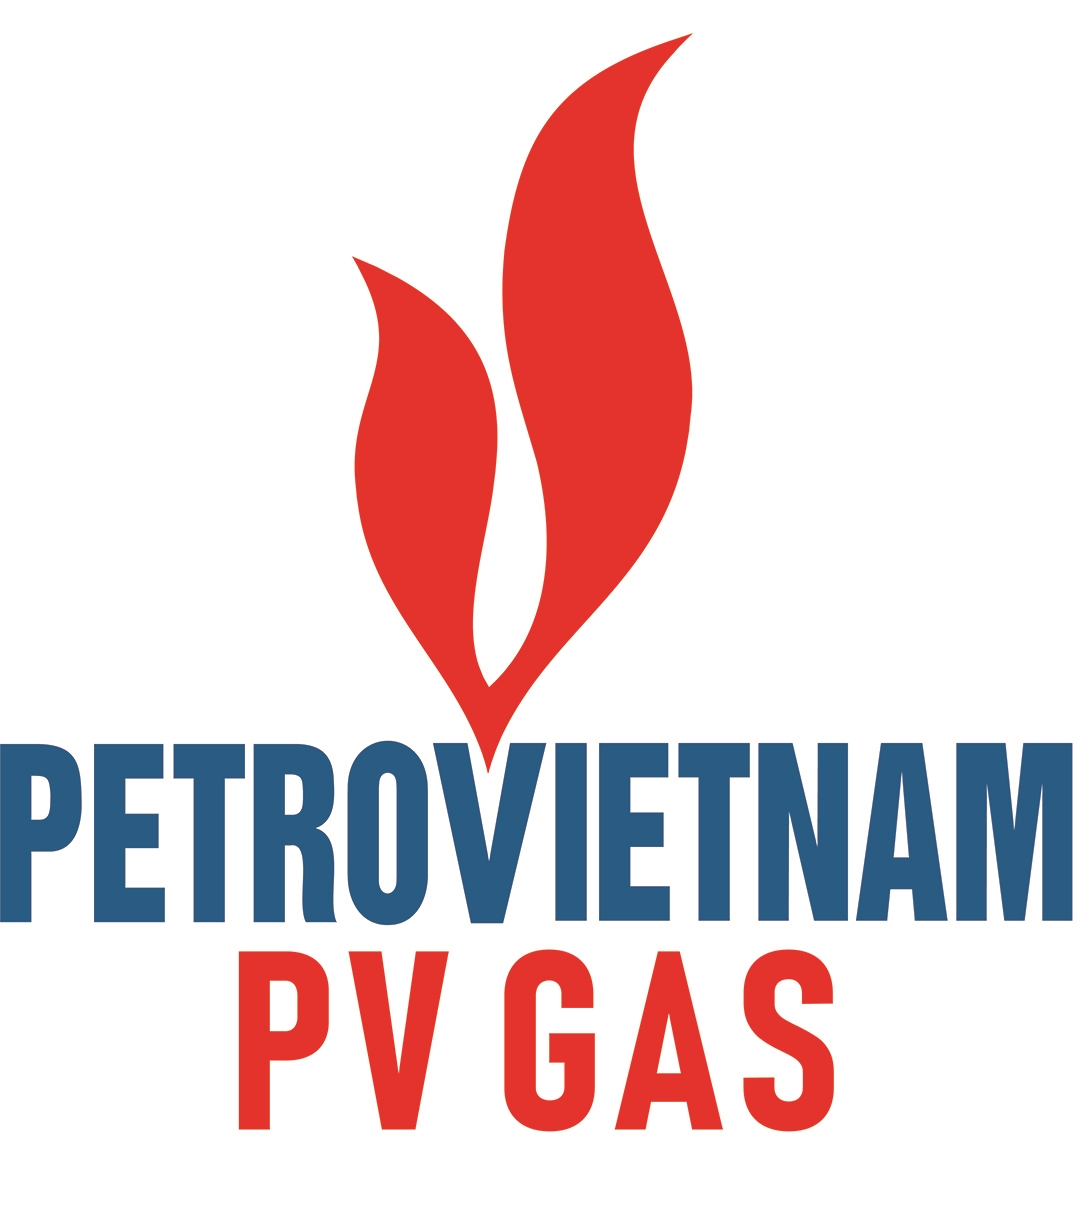 PV Gas